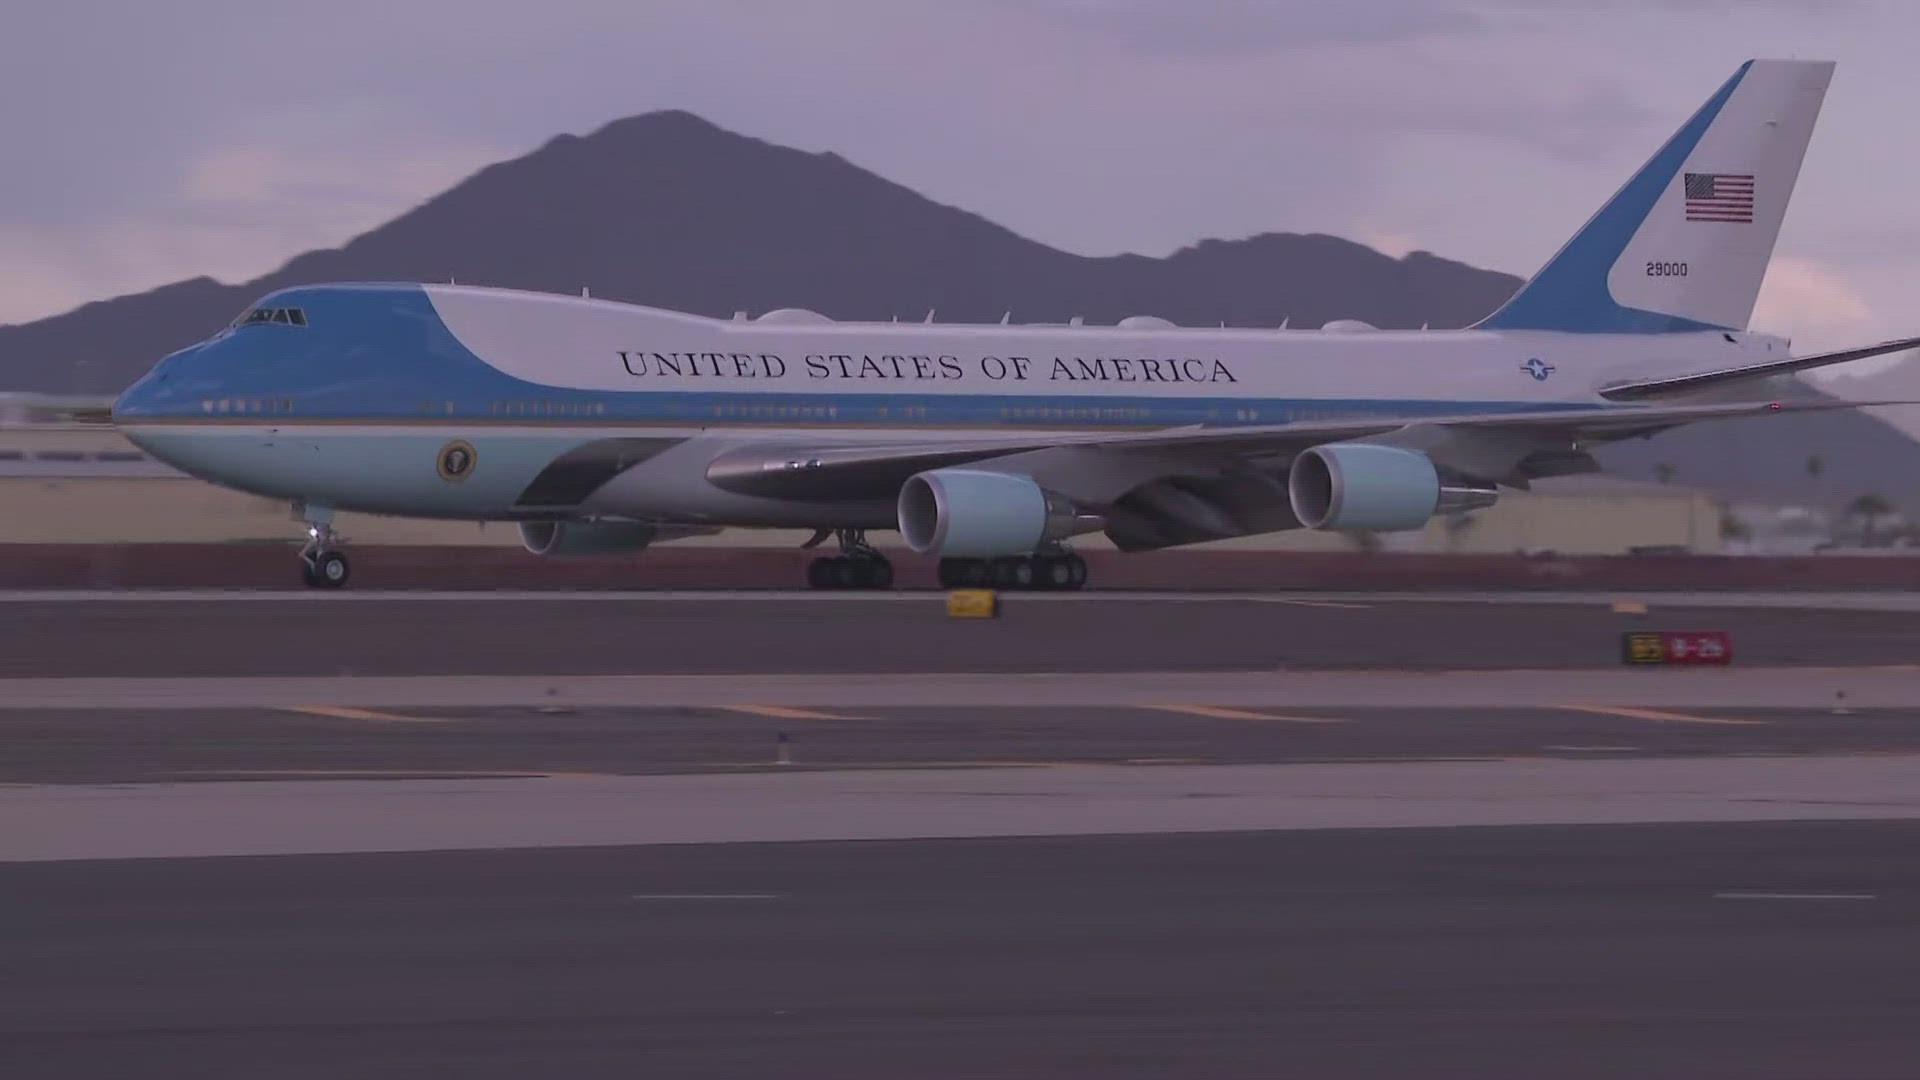 President Joe Biden is landing at Sky Harbor ahead of campaign events in Phoenix